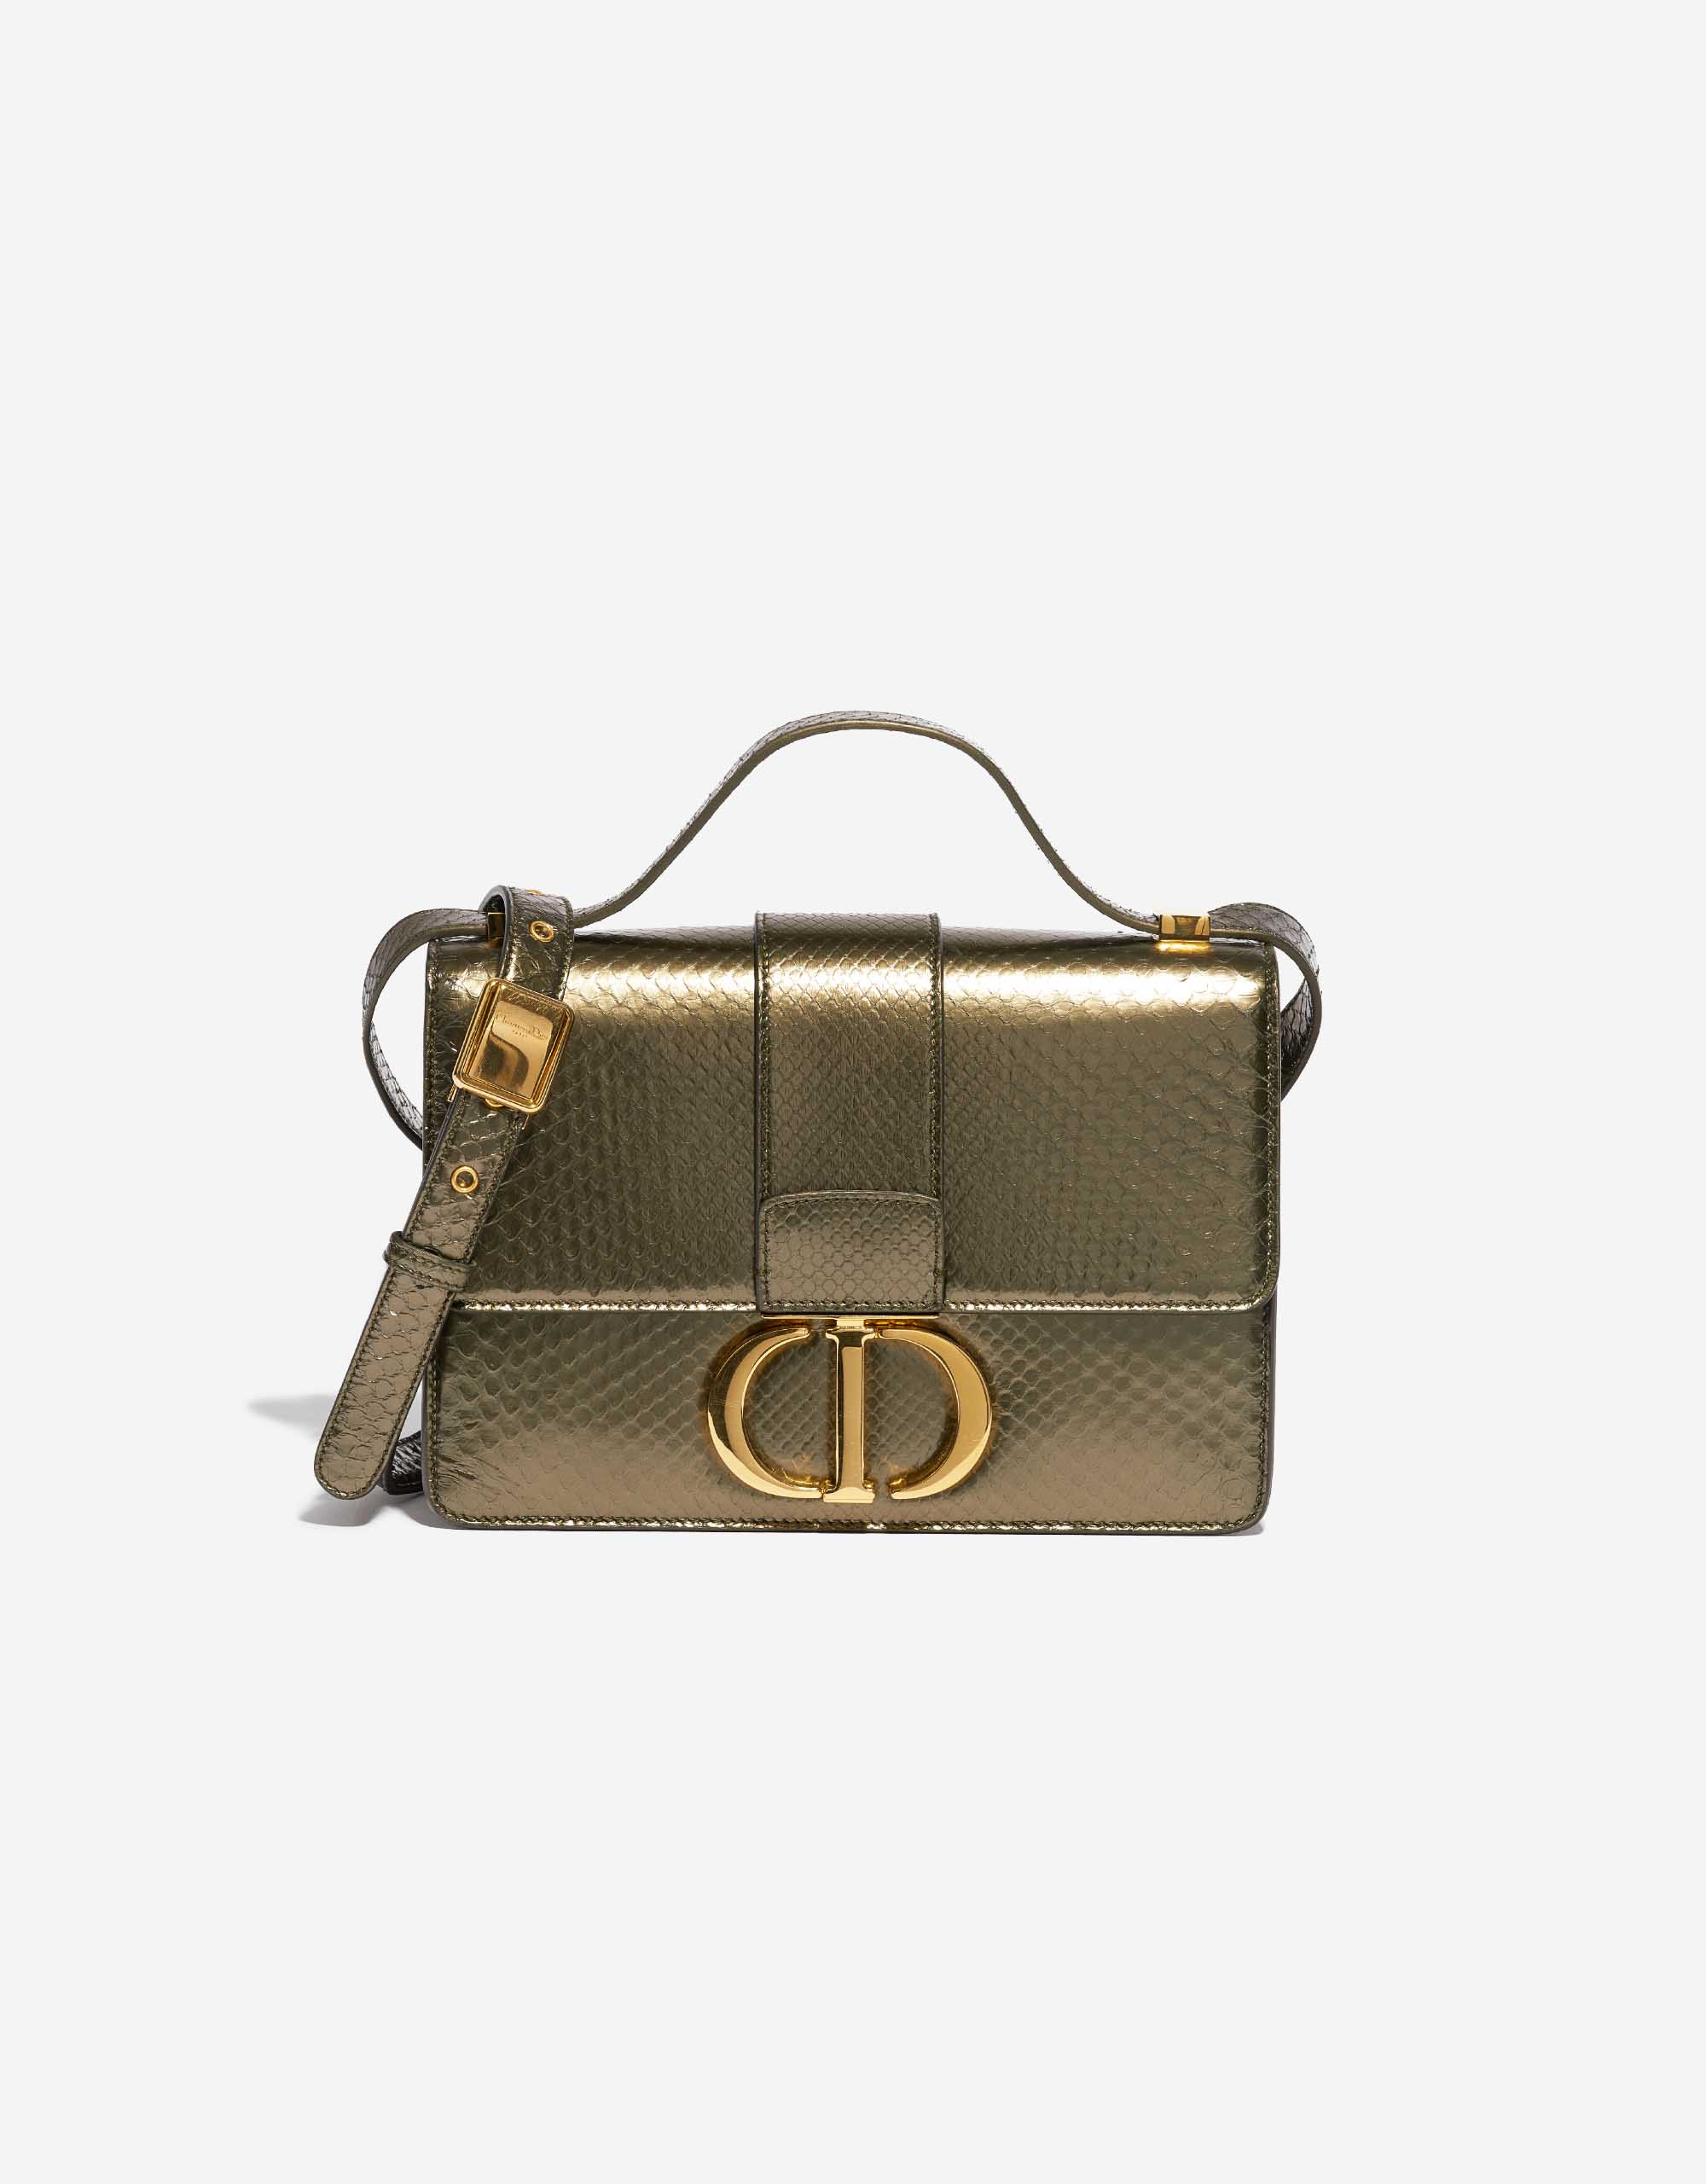 Christian Dior 30 Montaigne Bag Blue-Grey Leather Gold Tone